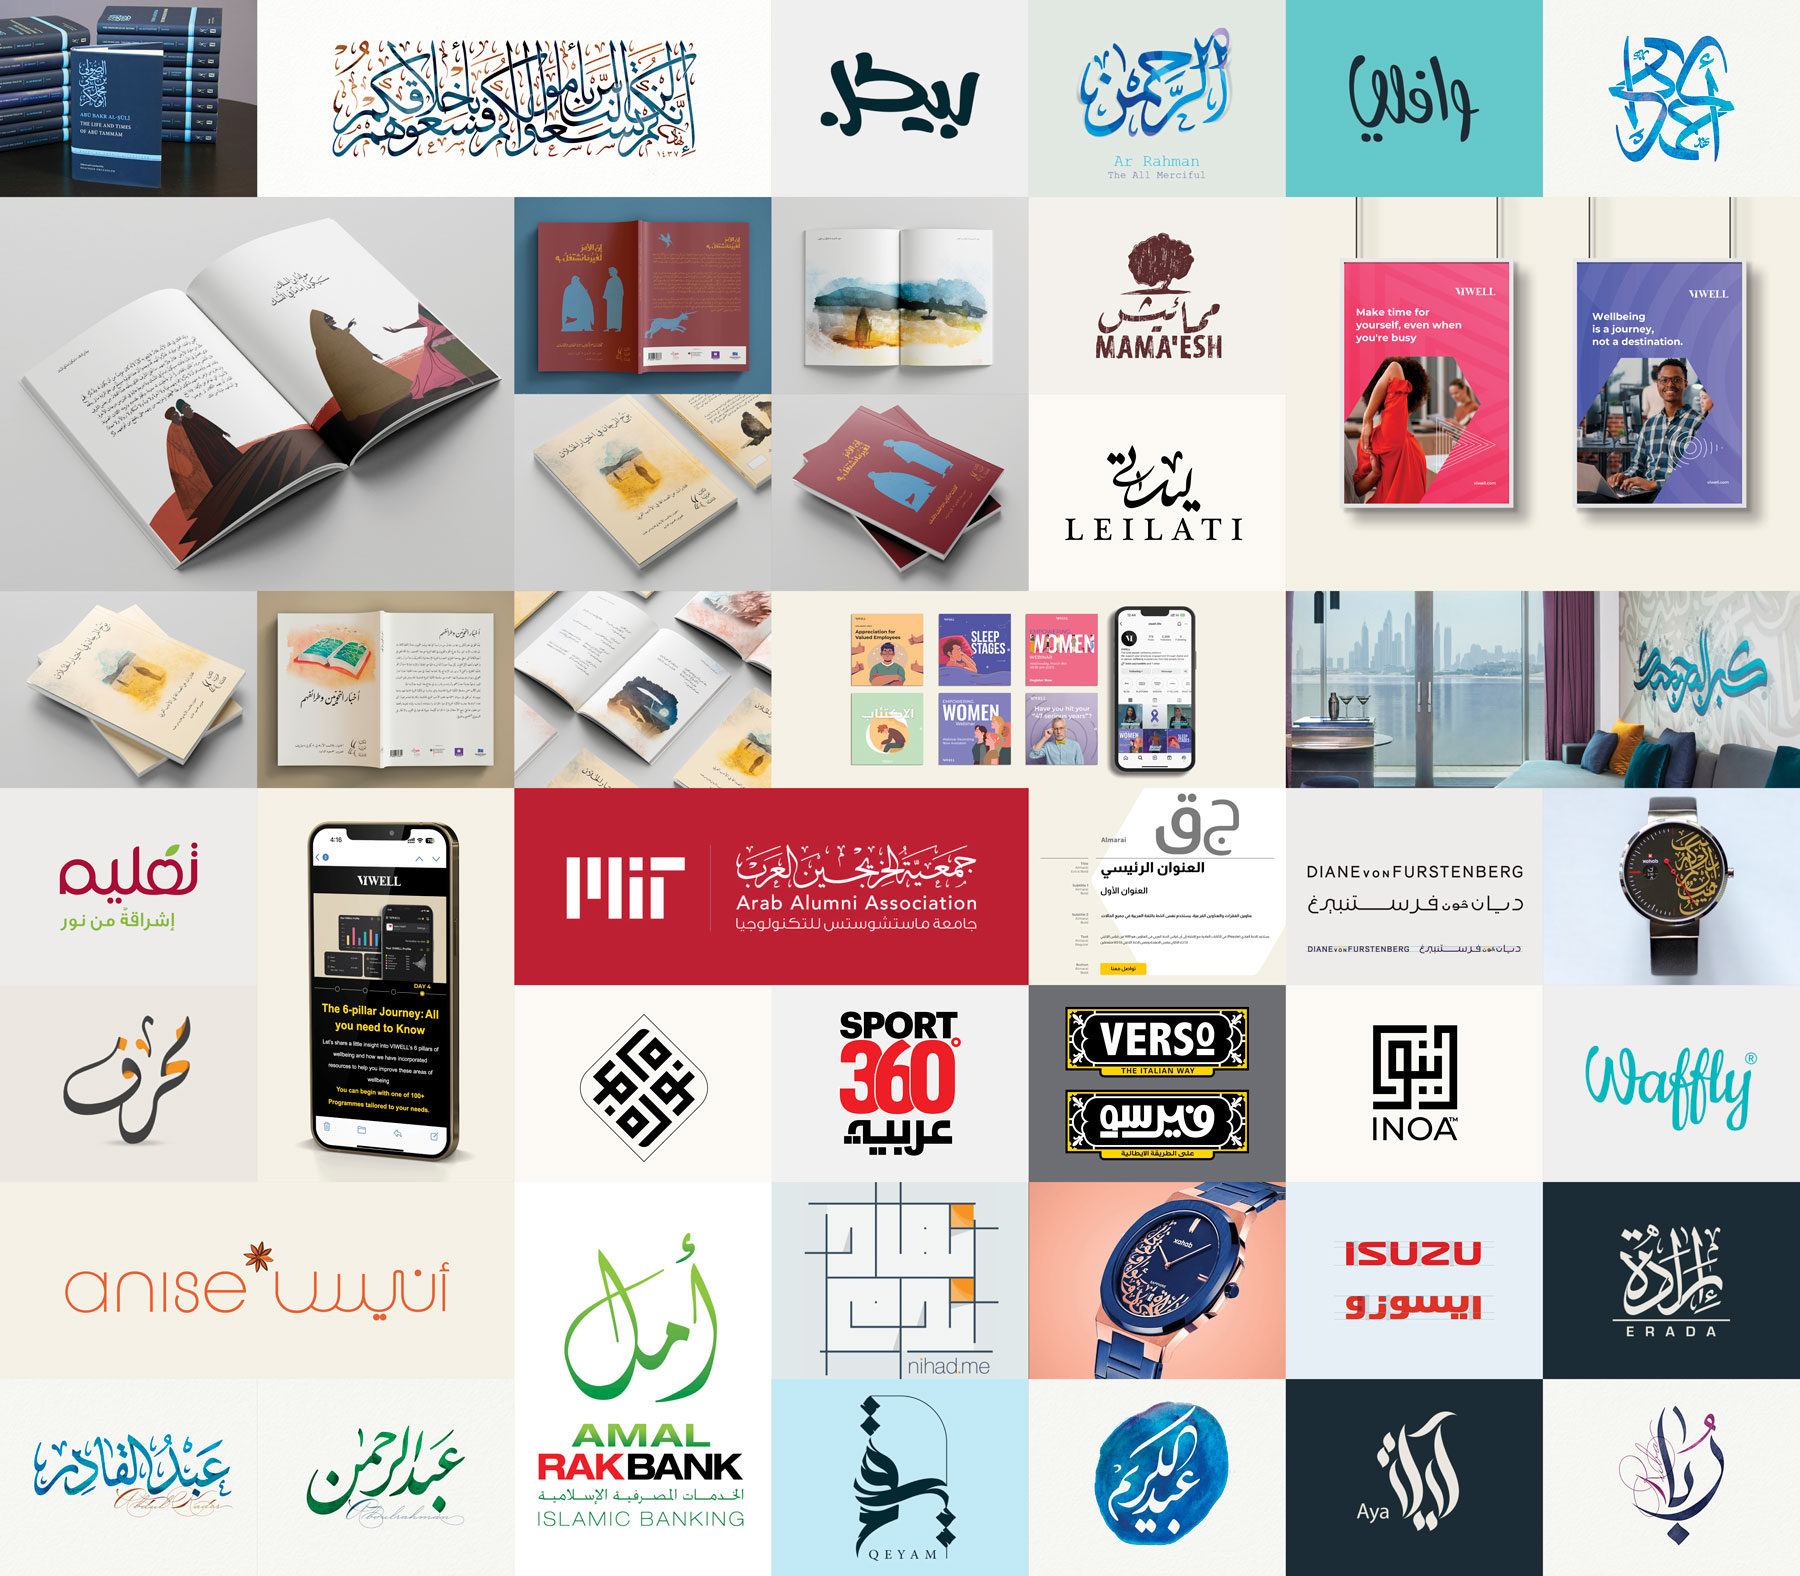 Creative Strategist, Visual Artist, Graphic Designer, and Digital Arabic Calligrapher based in Dubai.